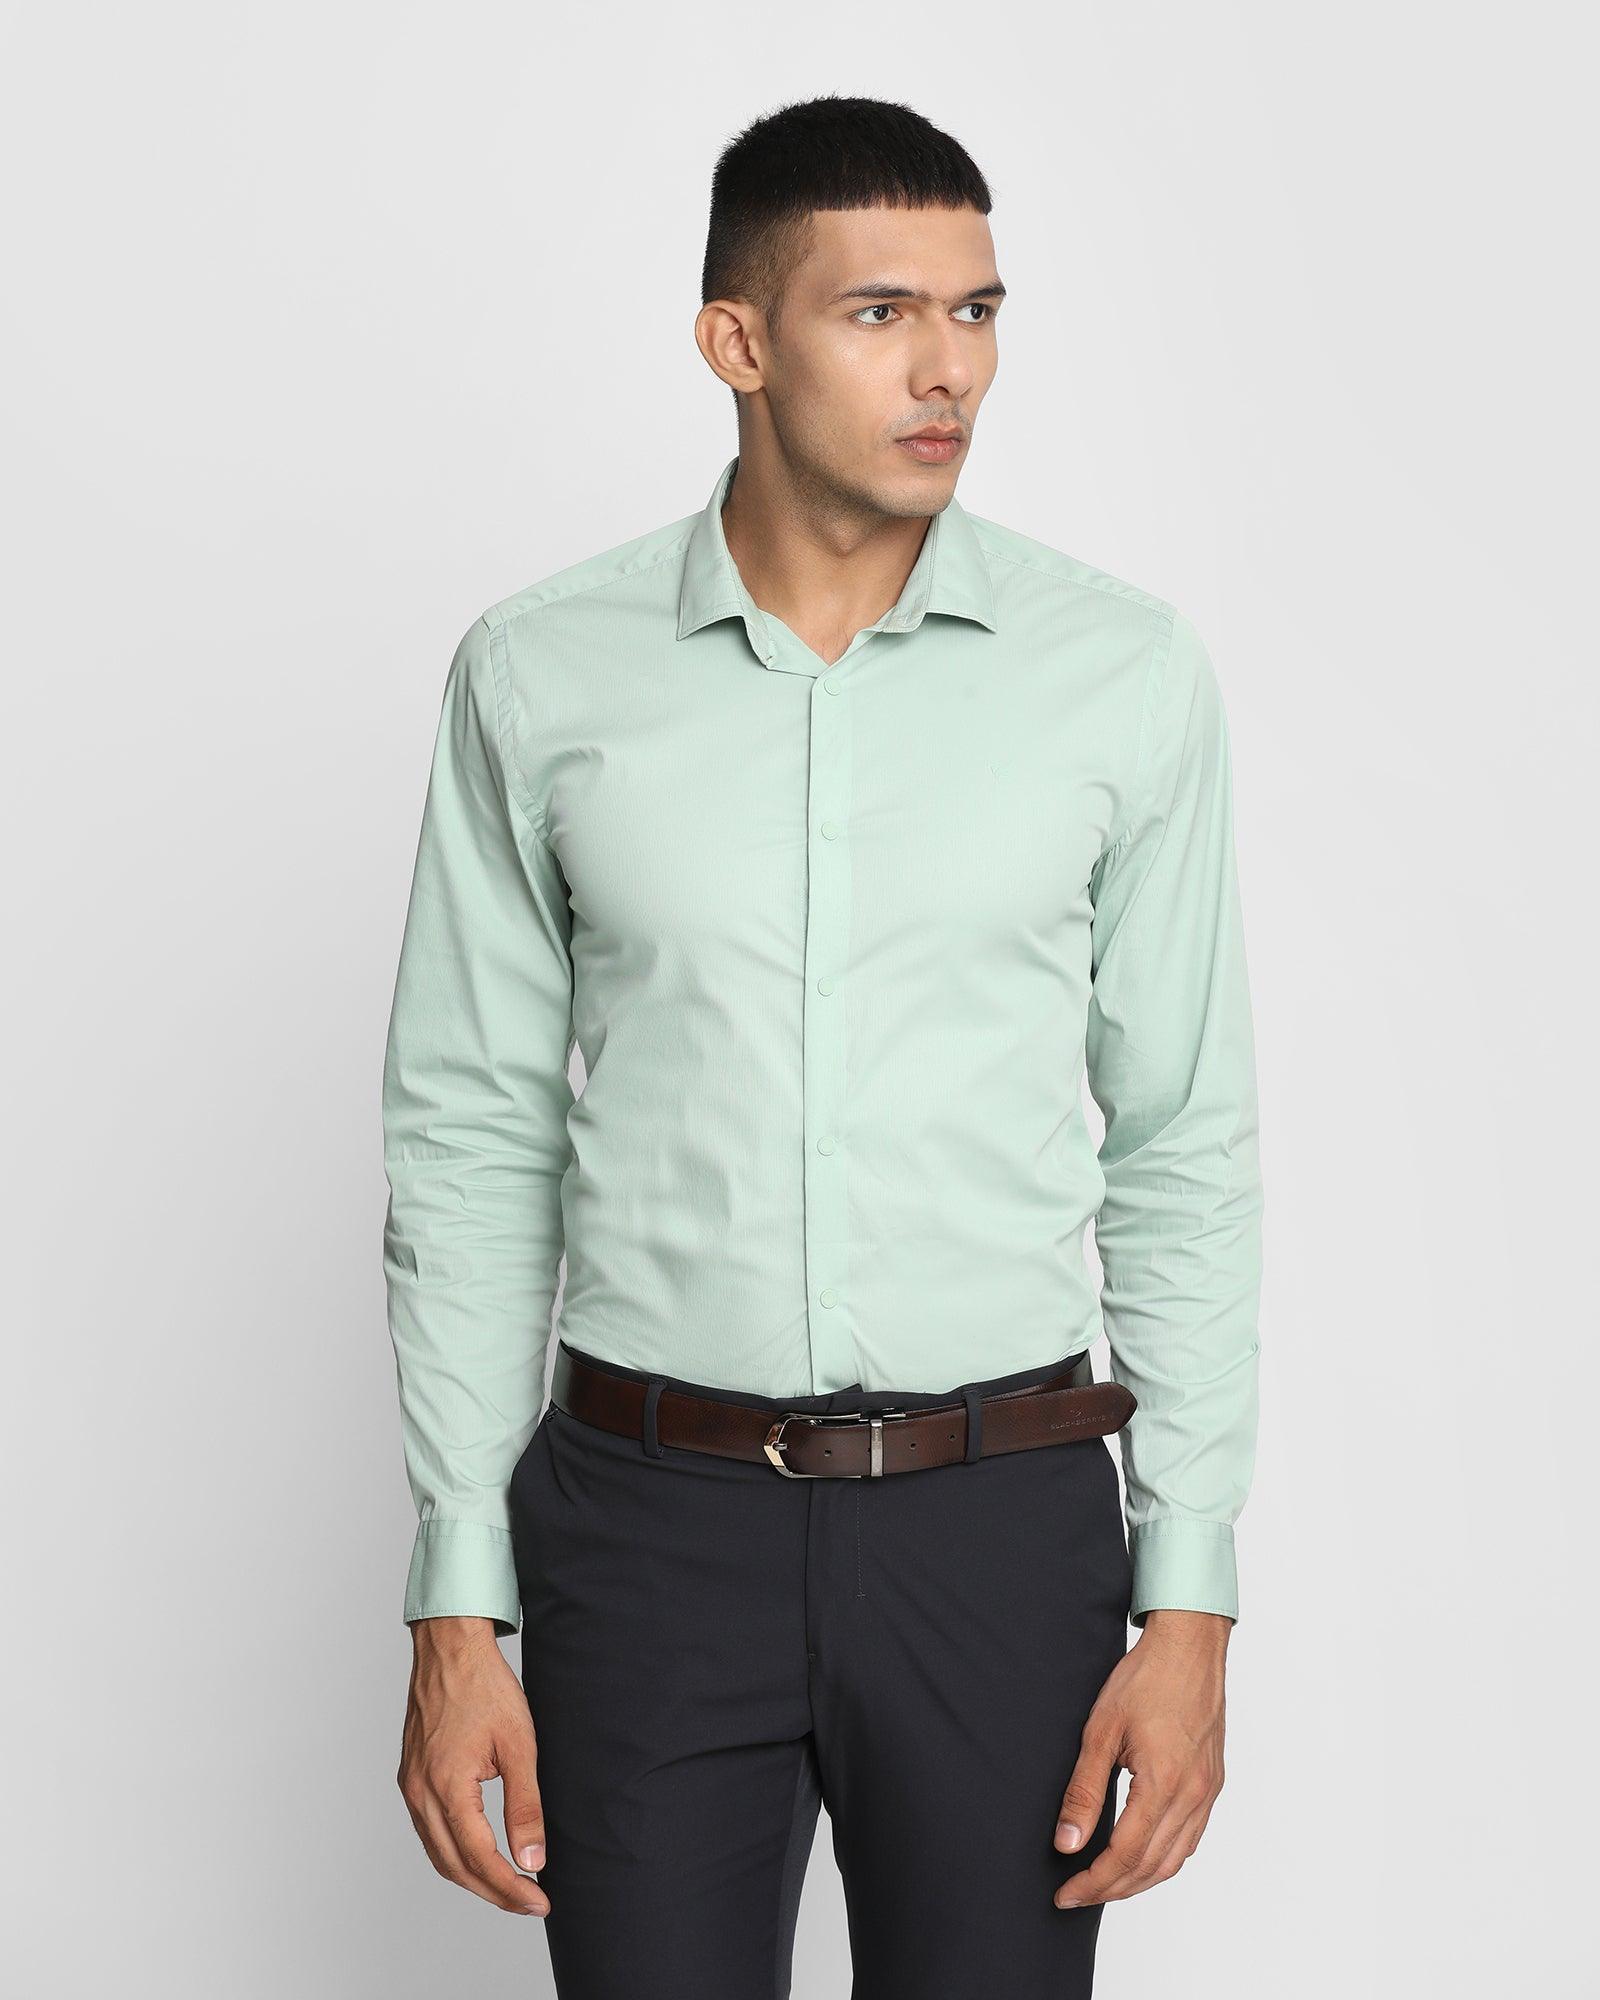 TechPro Formal Green Solid Shirt - Cloud